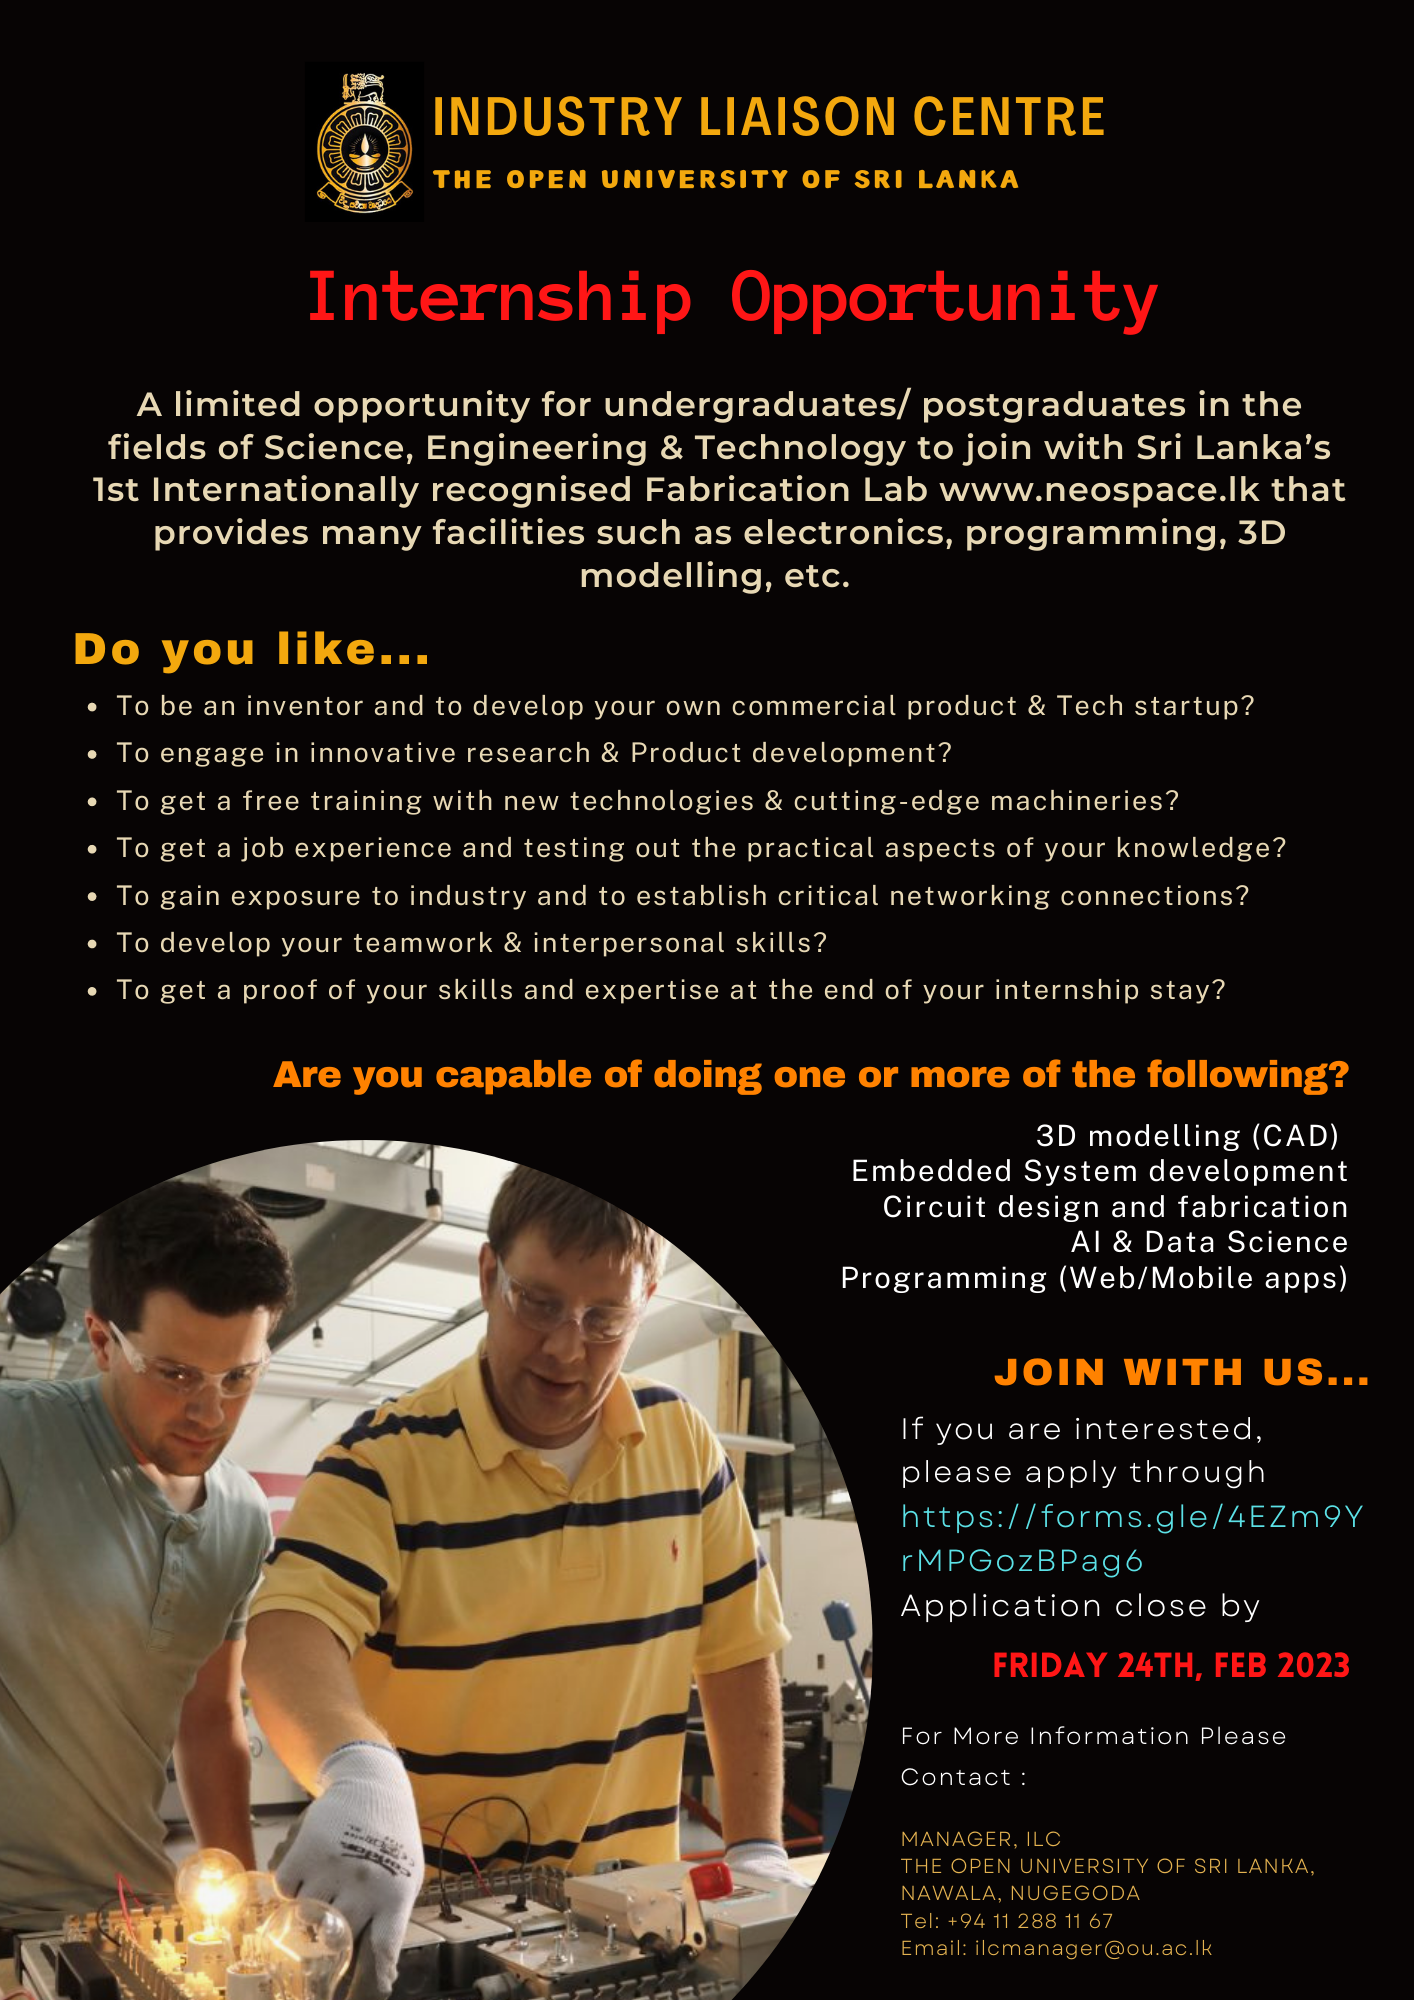 Internship Opportunity/ Industry Liaison Centre